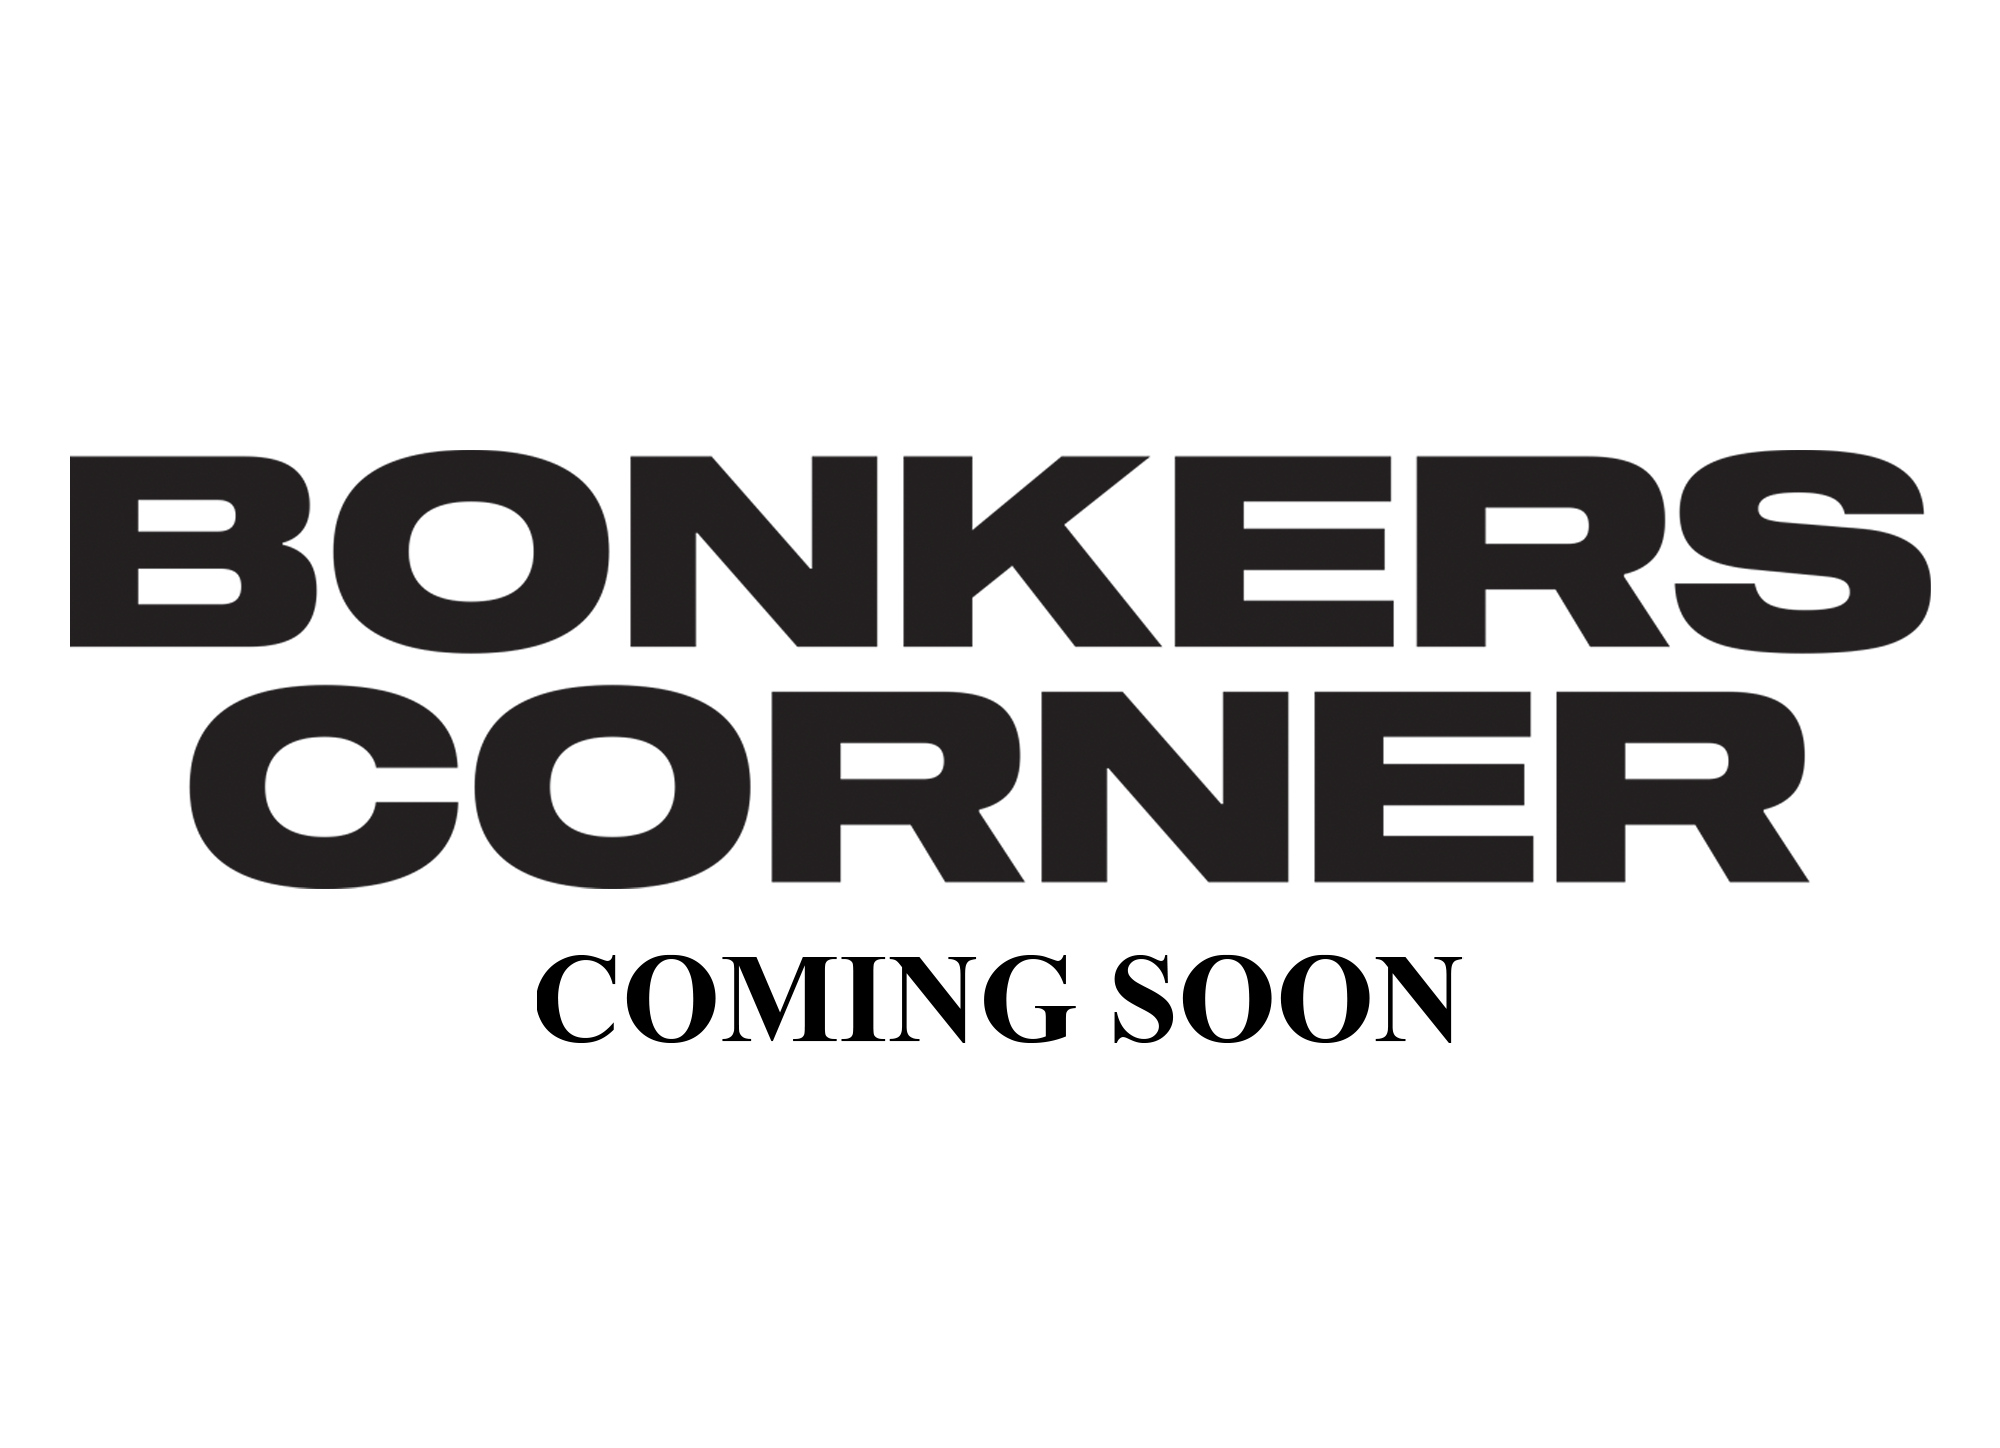 Bonkers Corner